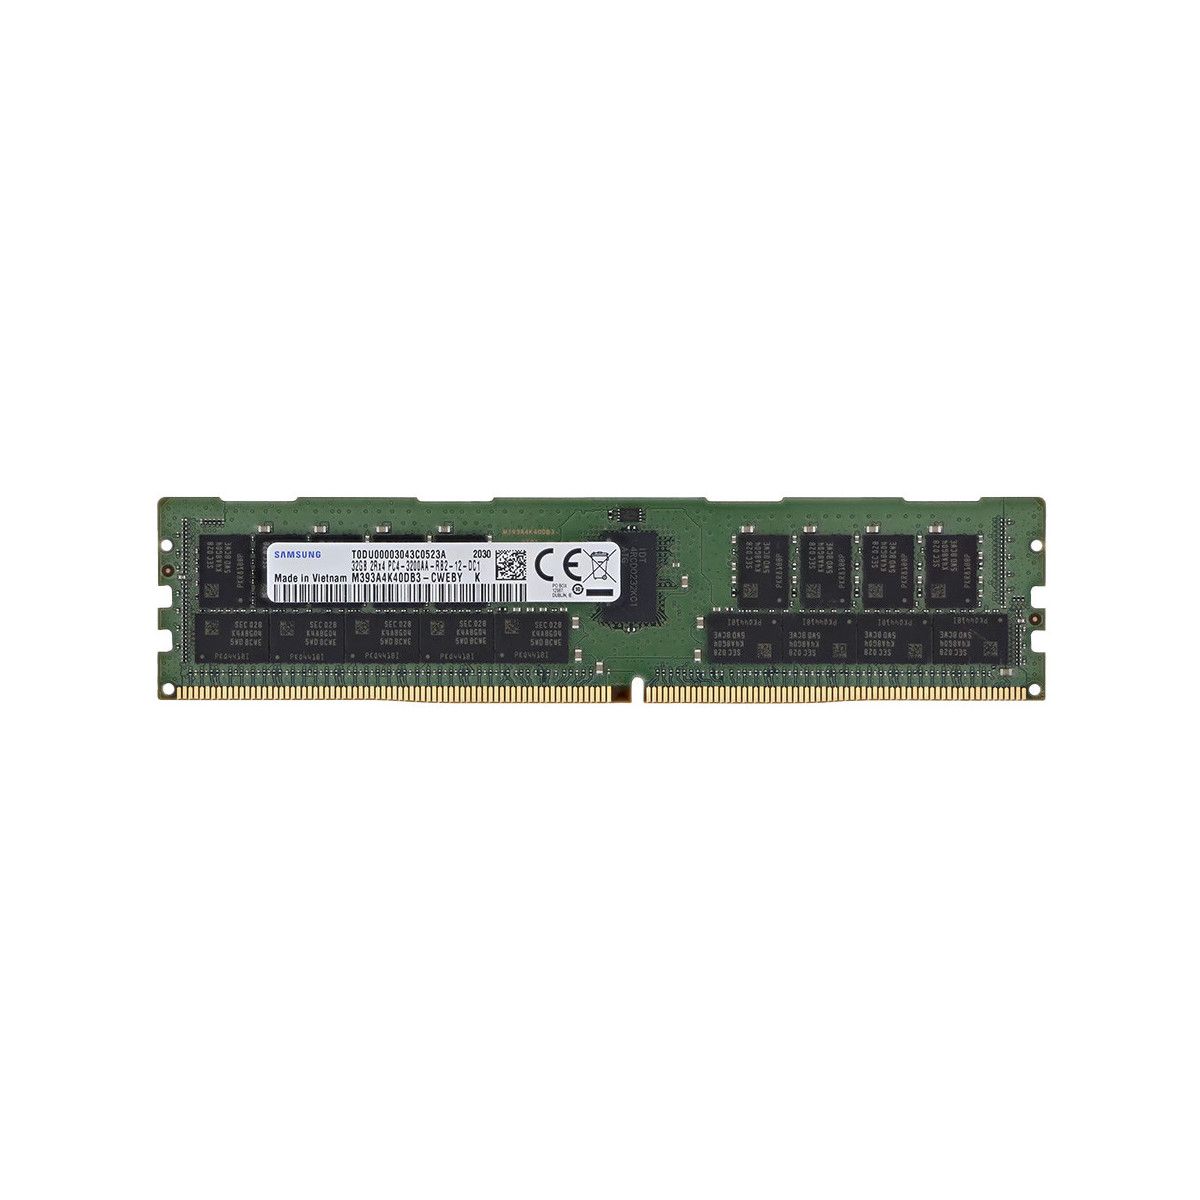 P07646-H21-MS - Memstar 1x 32GB DDR4-3200 RDIMM PC4-25600R - Mem-star Memorie OEM compatibilă 1 - Memstar 